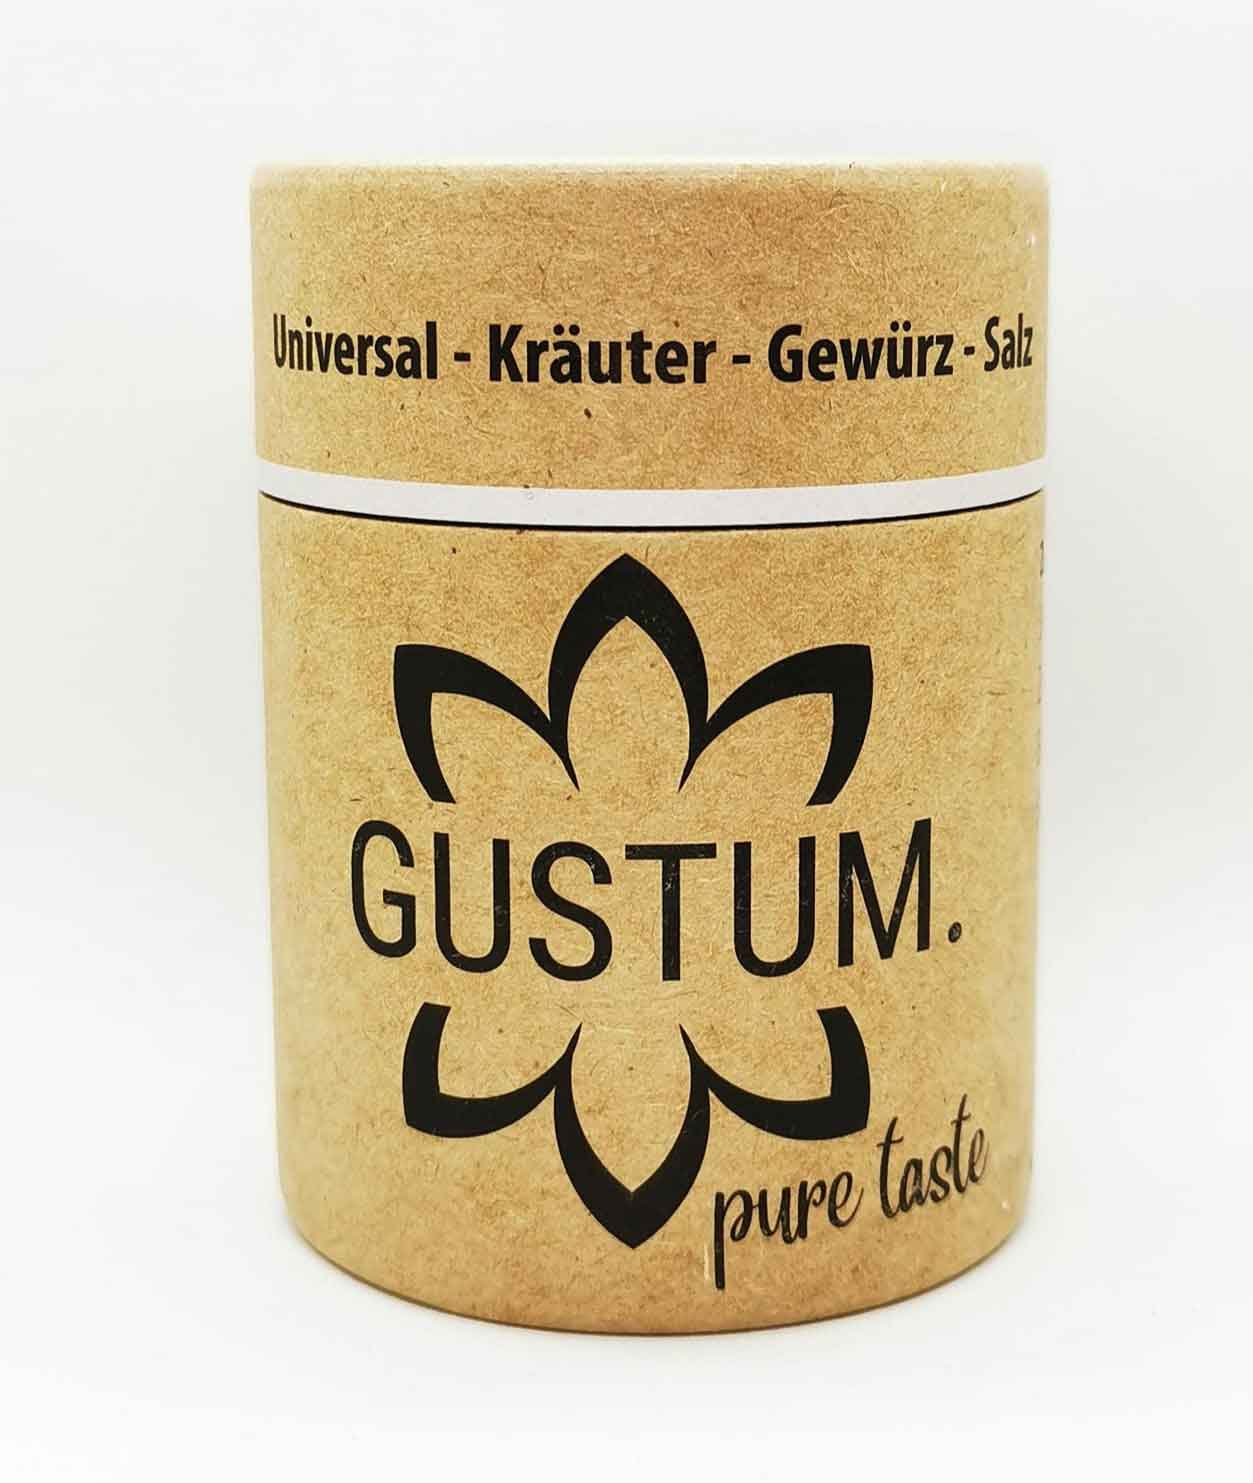 GUSTUM. Universal-Kräuter-Gewürz-Salz